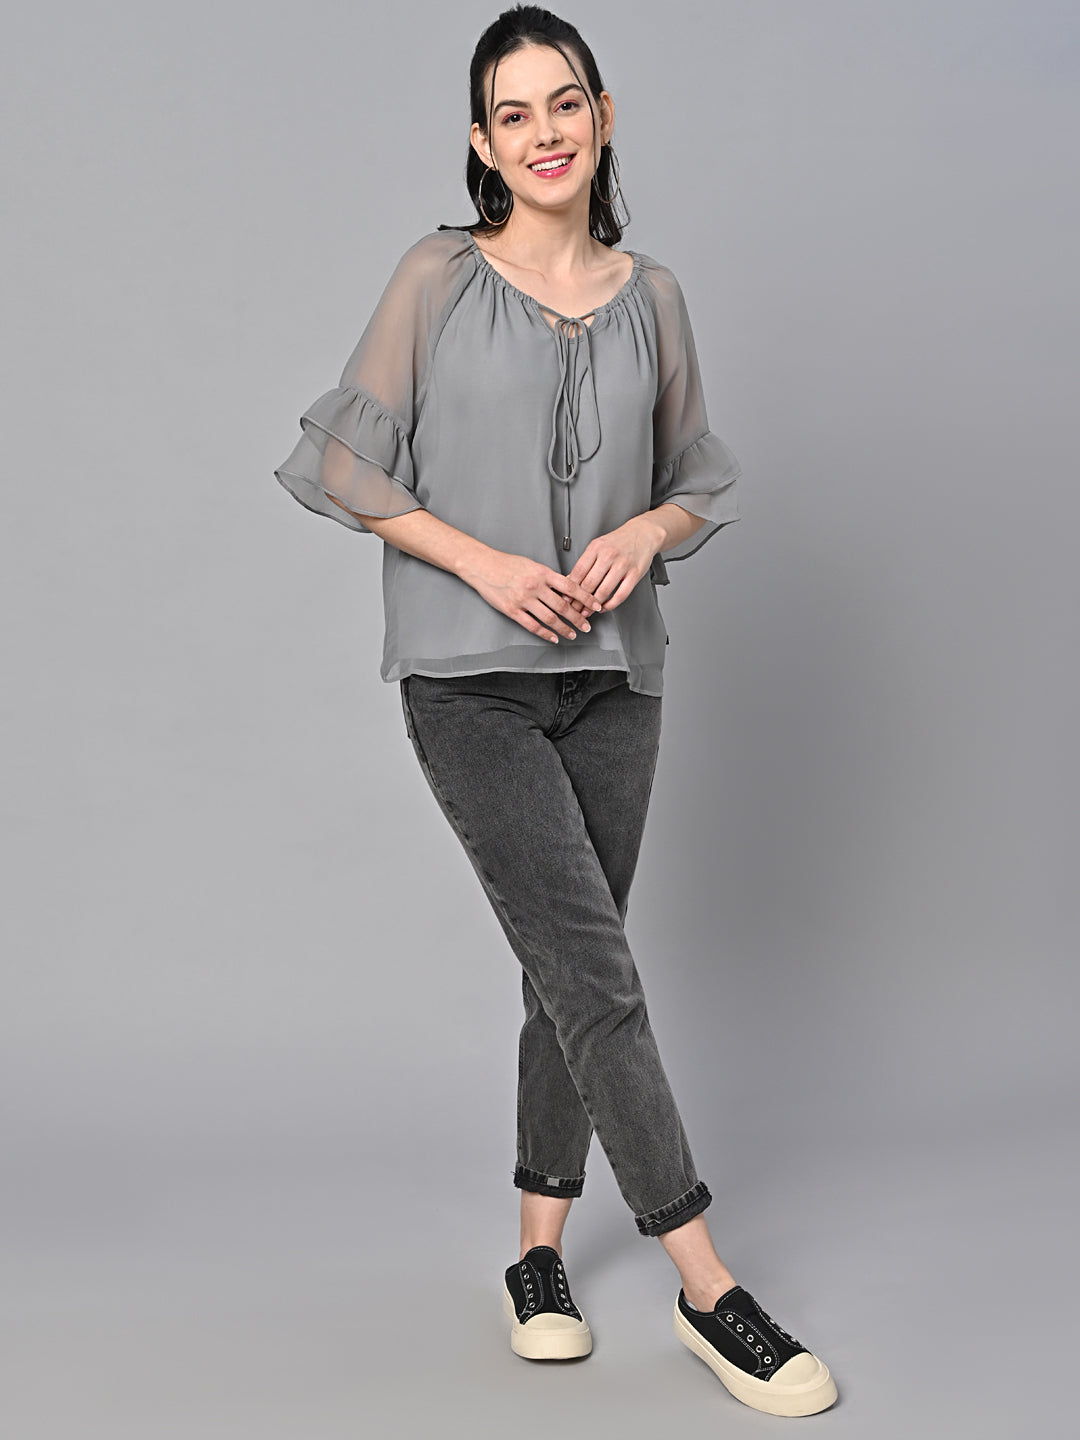 Valbone Women’s Grey Color Solid Top With Half-Sleeves